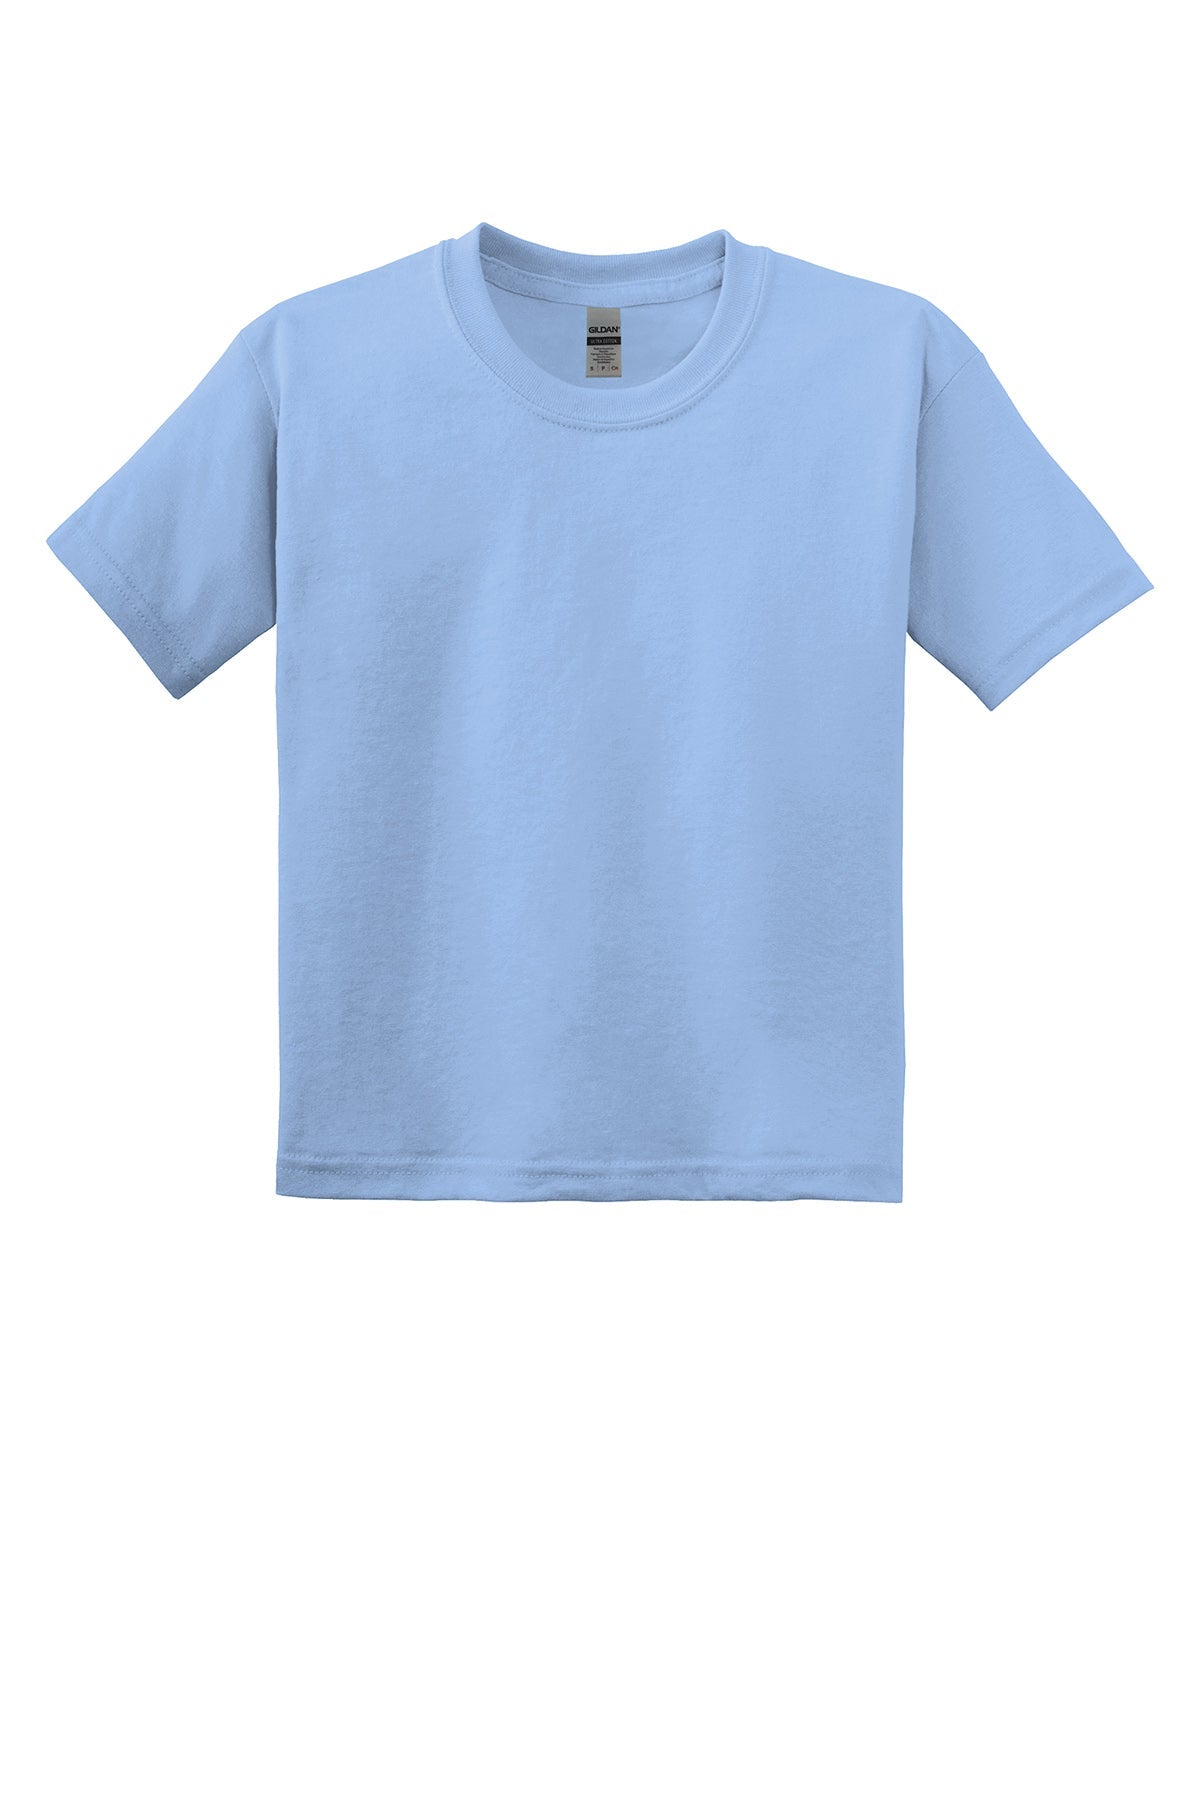 Gildan 8000B Youth Dryblend T-Shirt Yth Small / Lt Blue